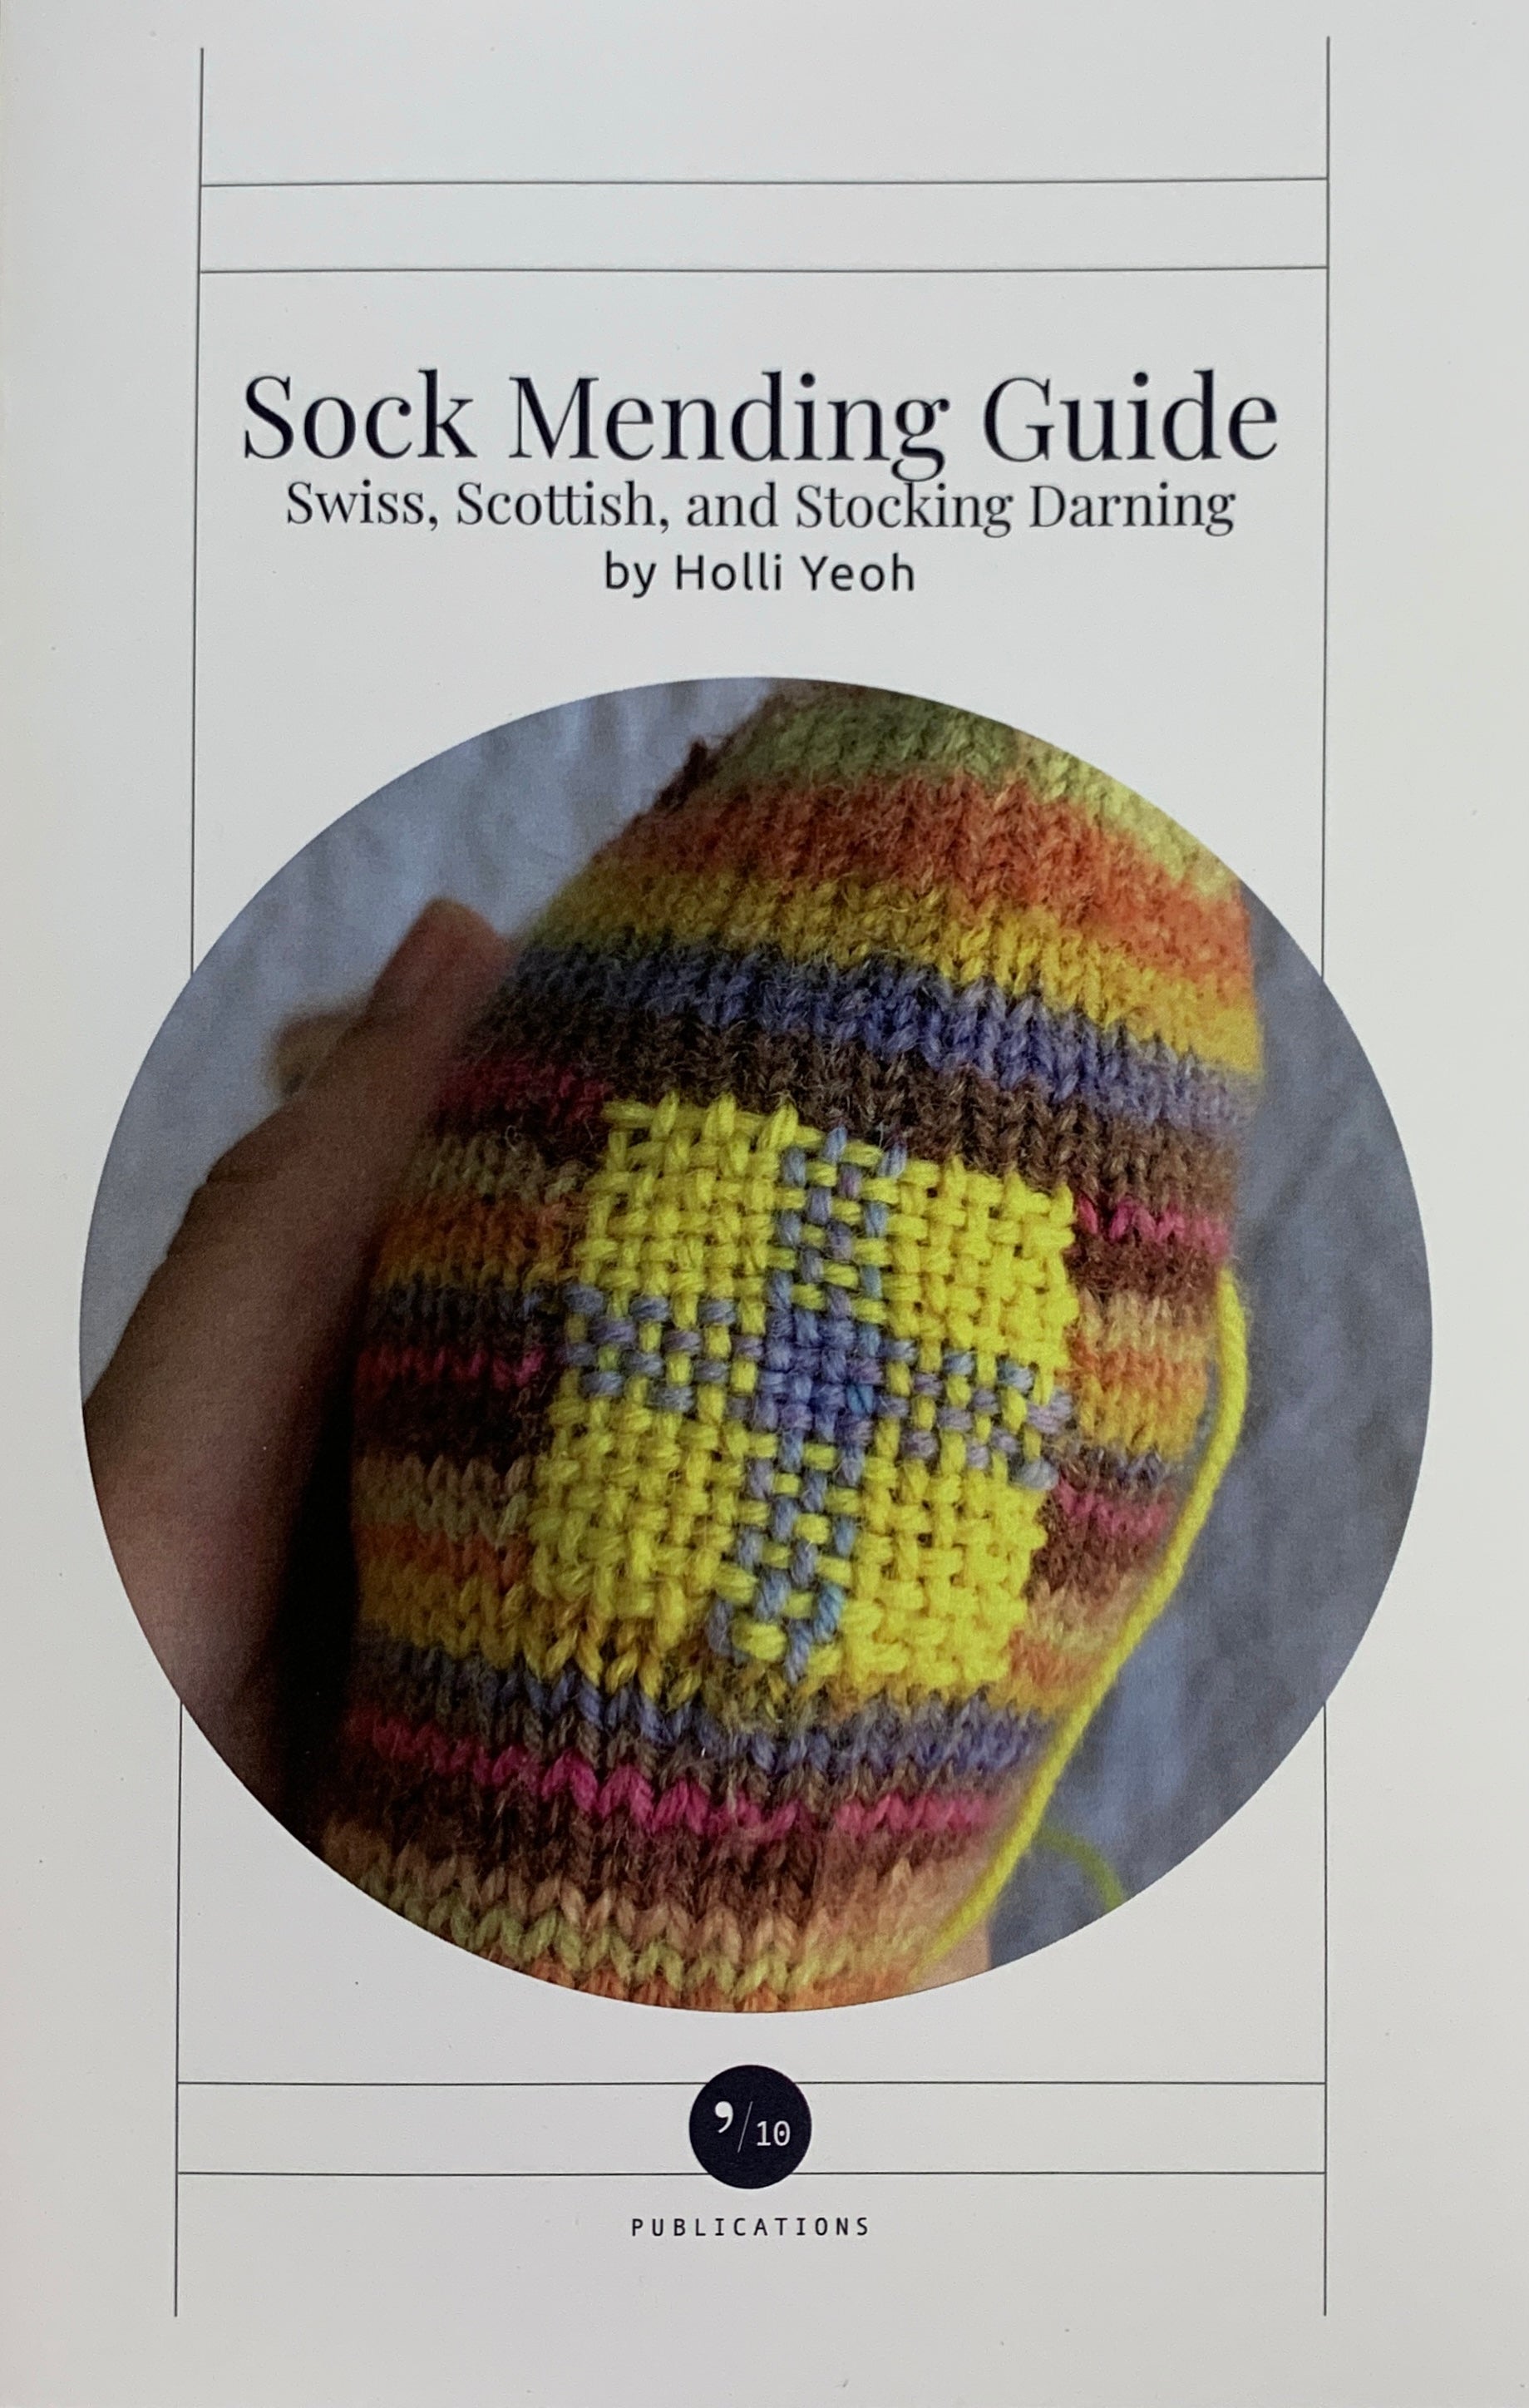 Master the art of darning socks - Gathered